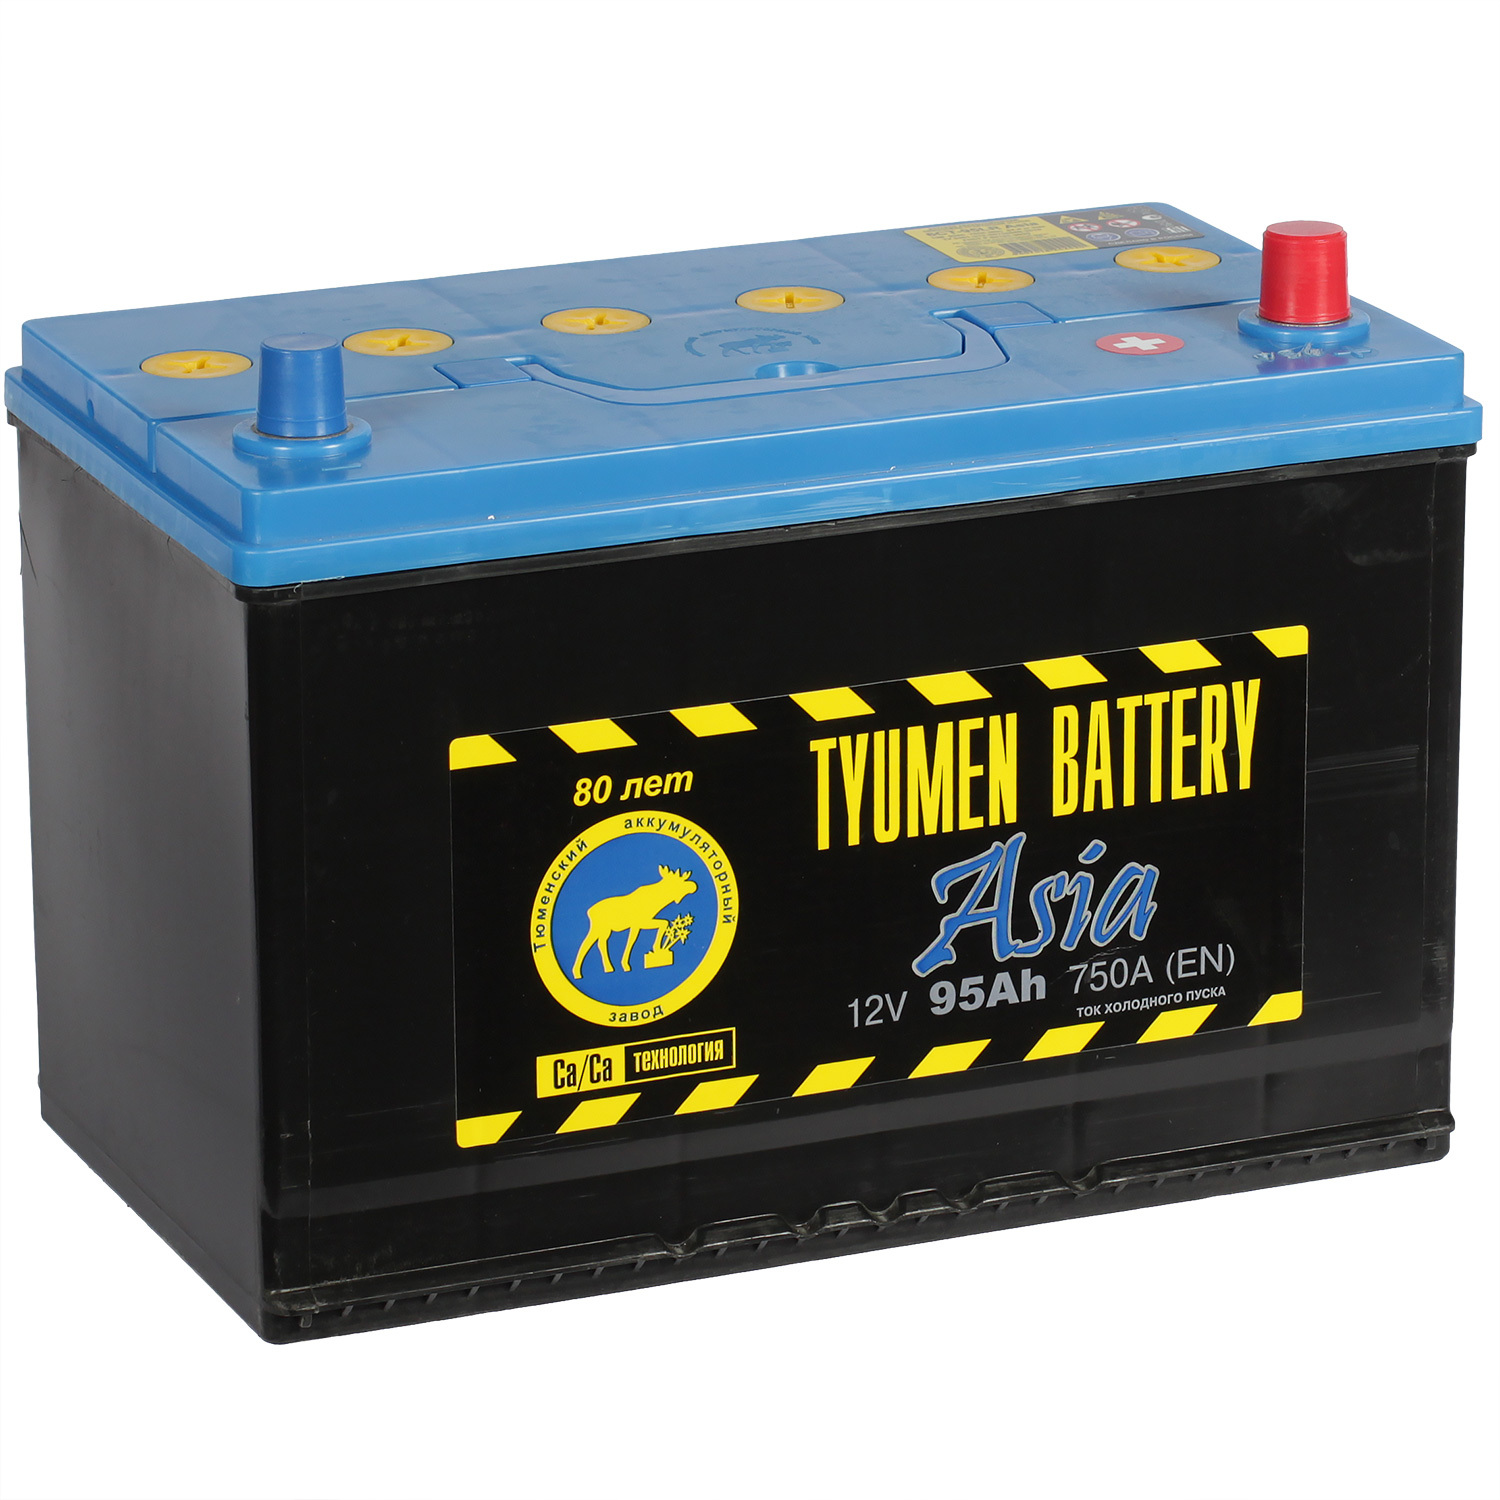 Tyumen Battery Автомобильный аккумулятор Tyumen Battery 95 Ач обратная полярность D31L tyumen battery автомобильный аккумулятор tyumen battery 95 ач прямая полярность d31r